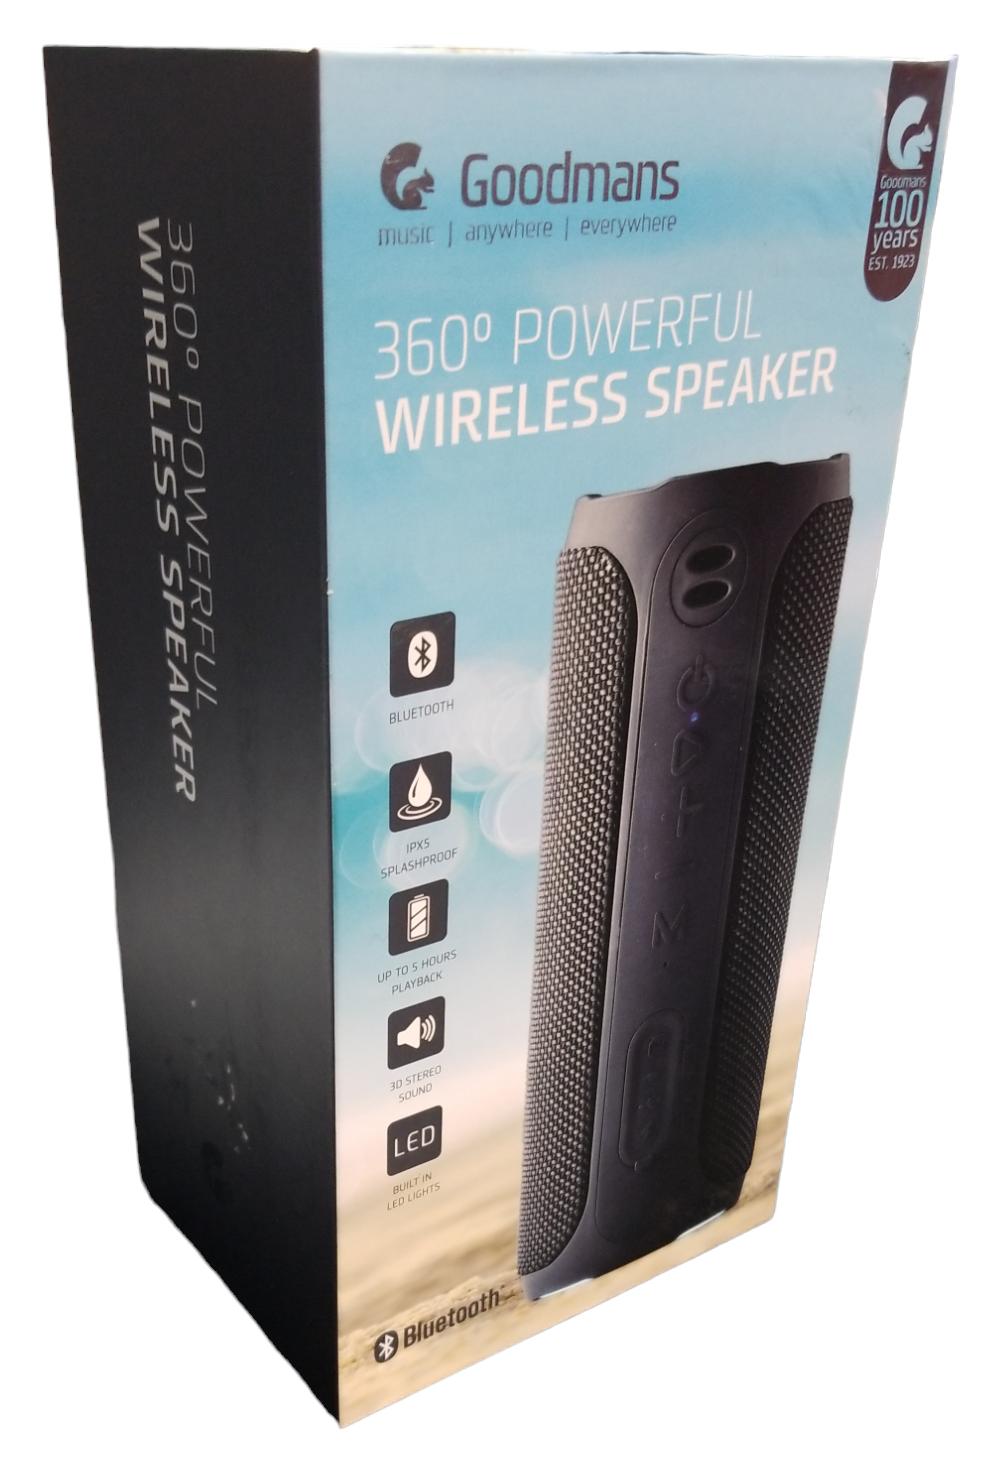 Goodmans - 360 Powerful Wireless Speaker - 386044 - Boxed & Sealed